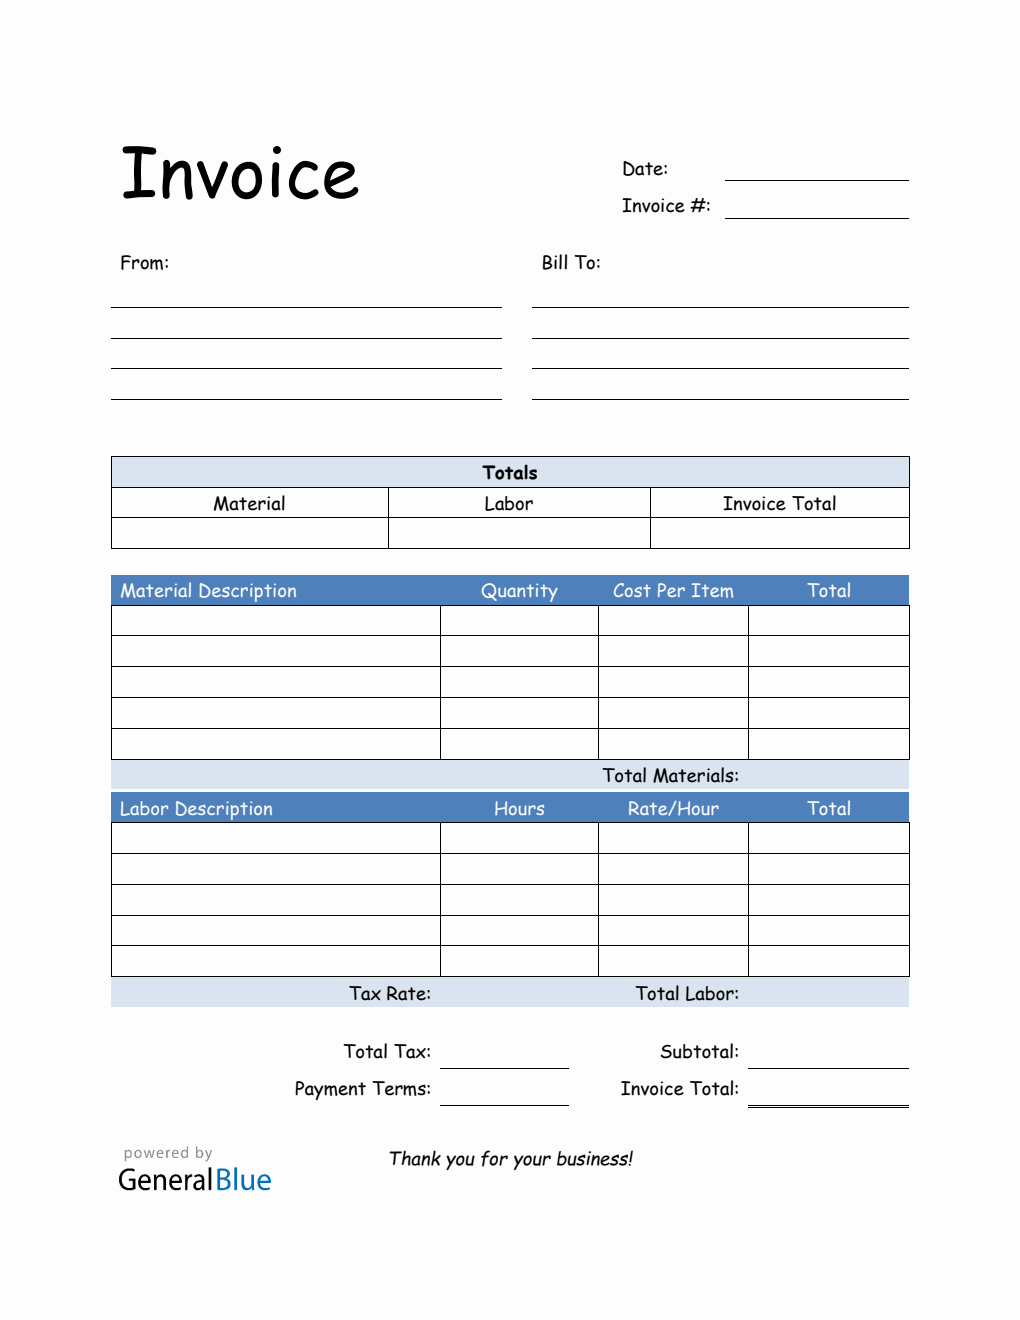 Parts and Labor Invoice in PDF (Blue)